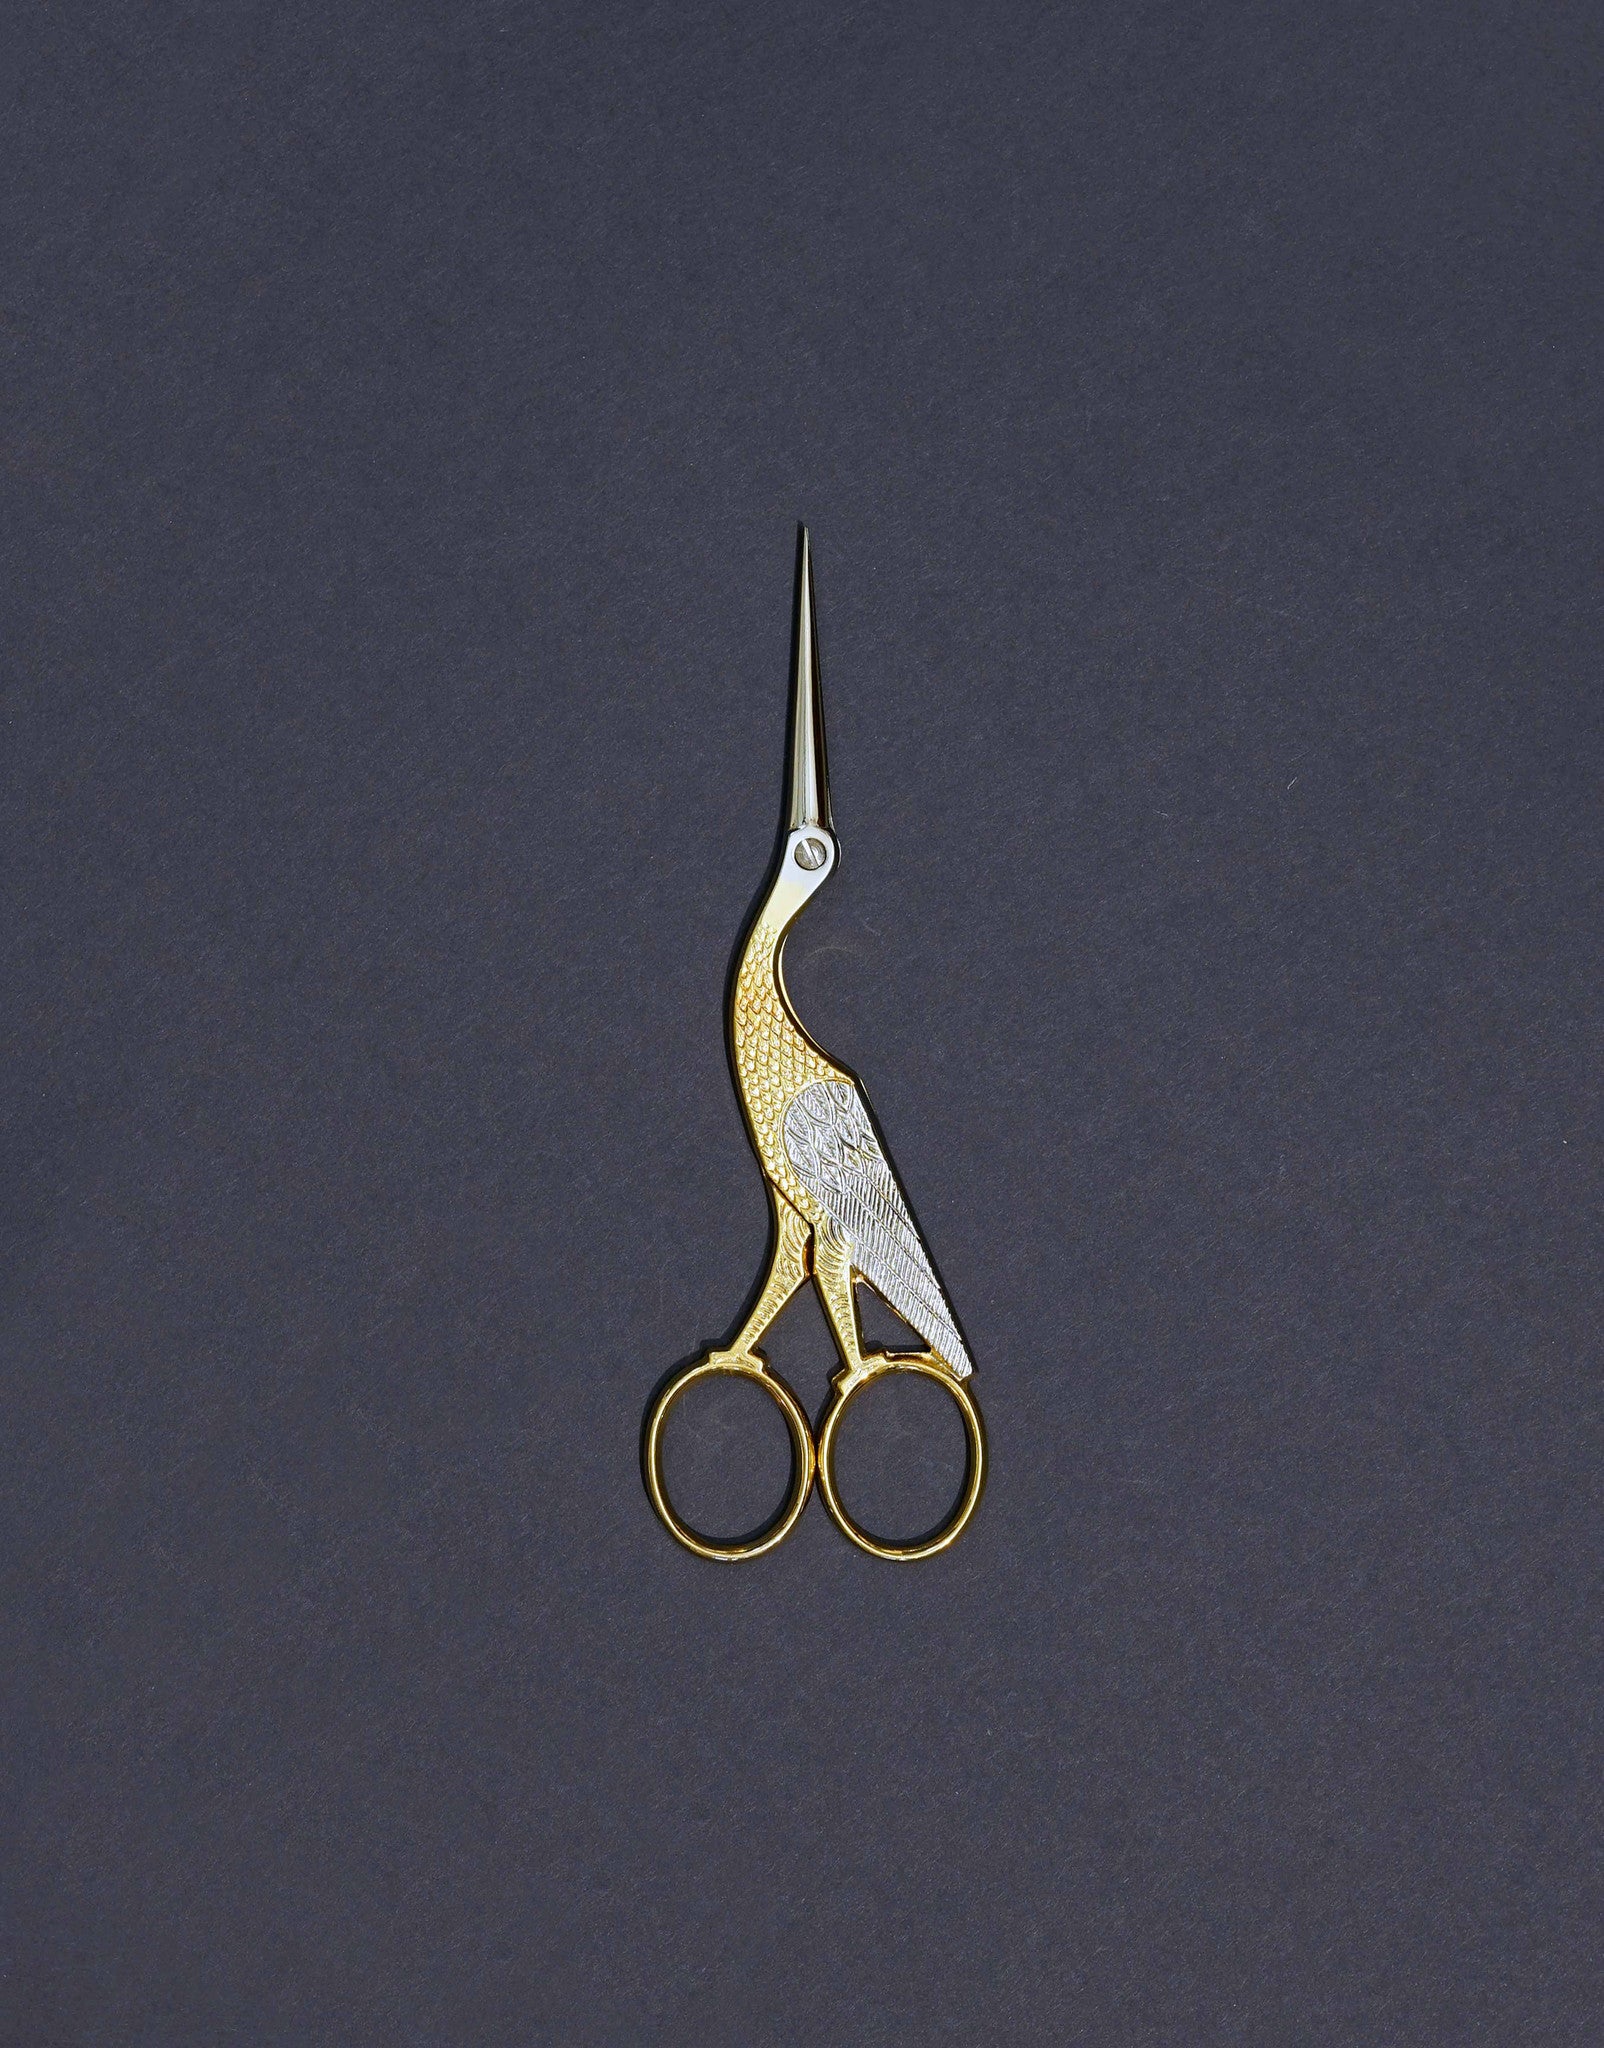 Premax Stork Italian Scissors